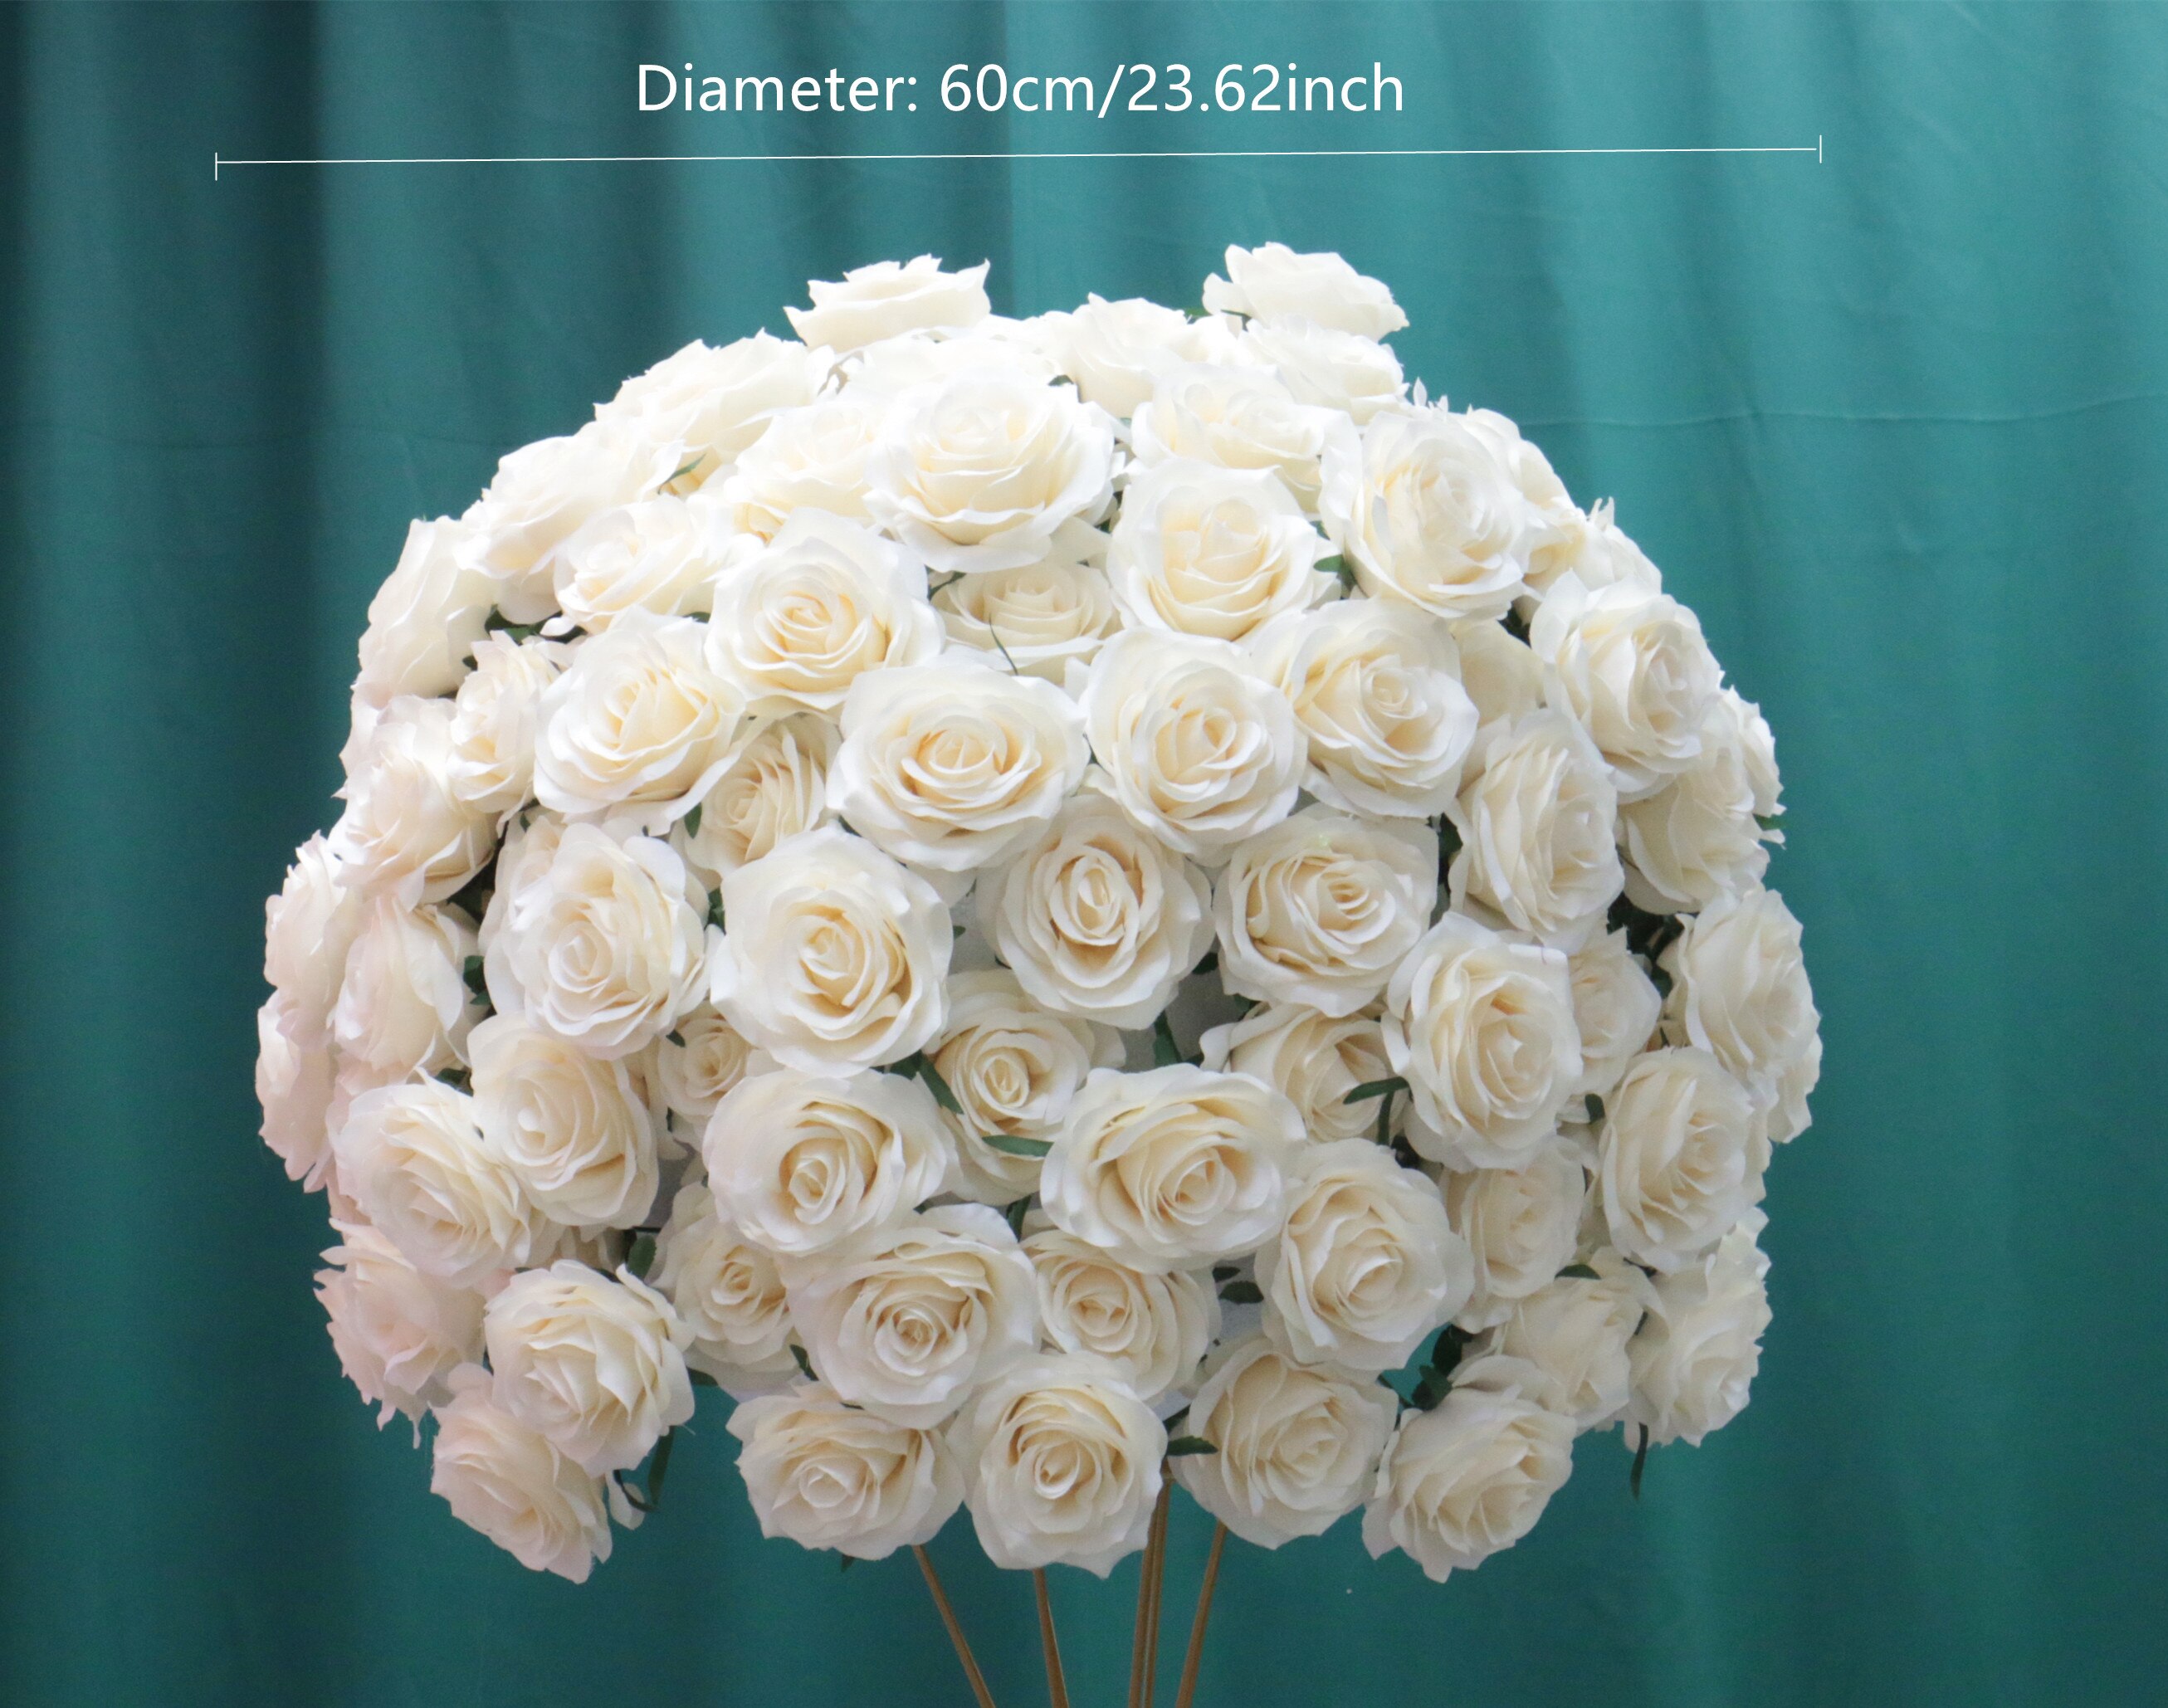 diy dollar store vase flower arrangment4